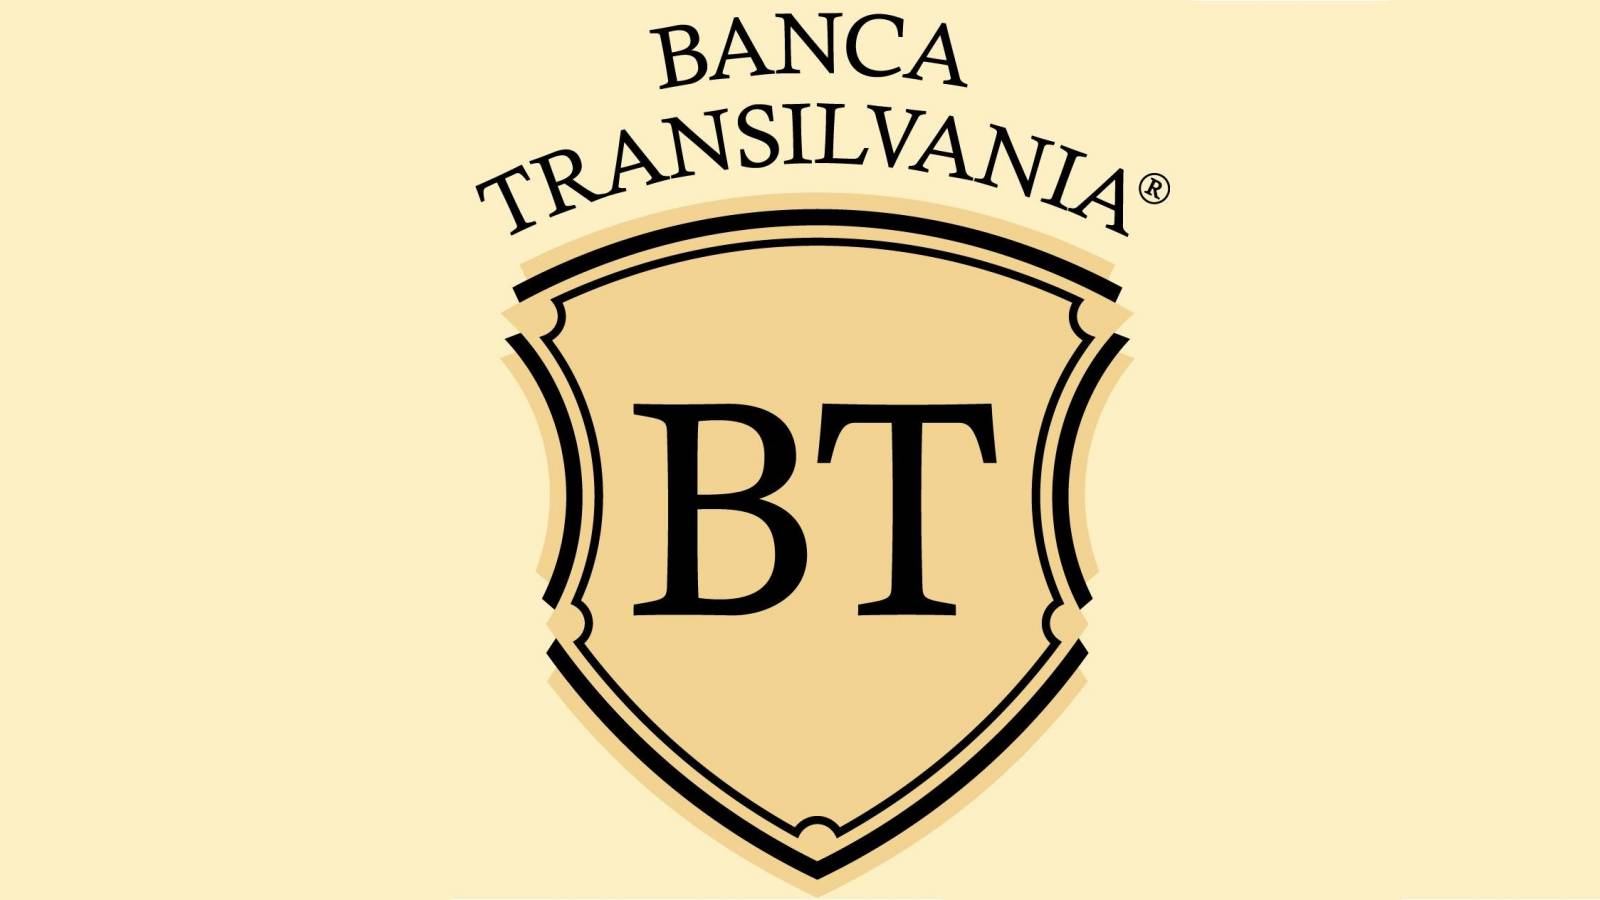 BANCA Transilvania rådgivning